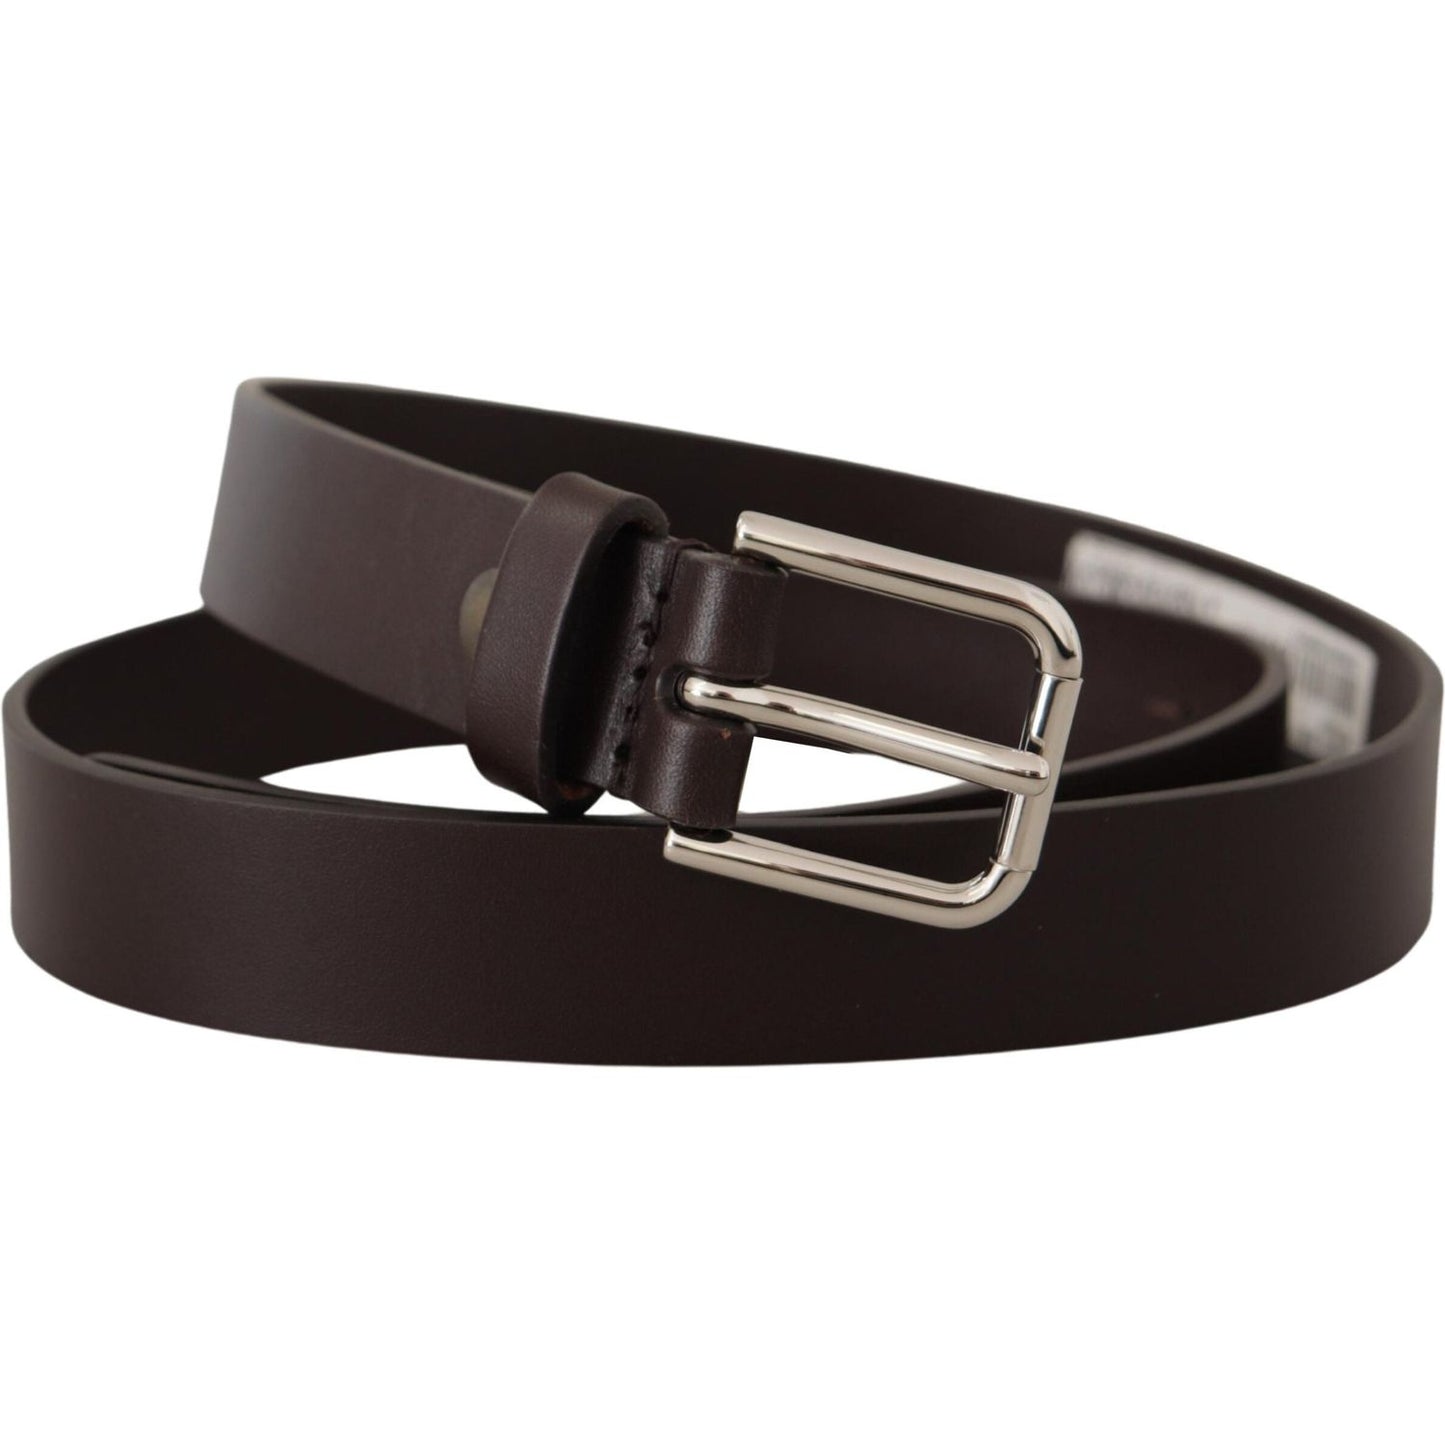 Elegant Leather Belt With Logo Buckle